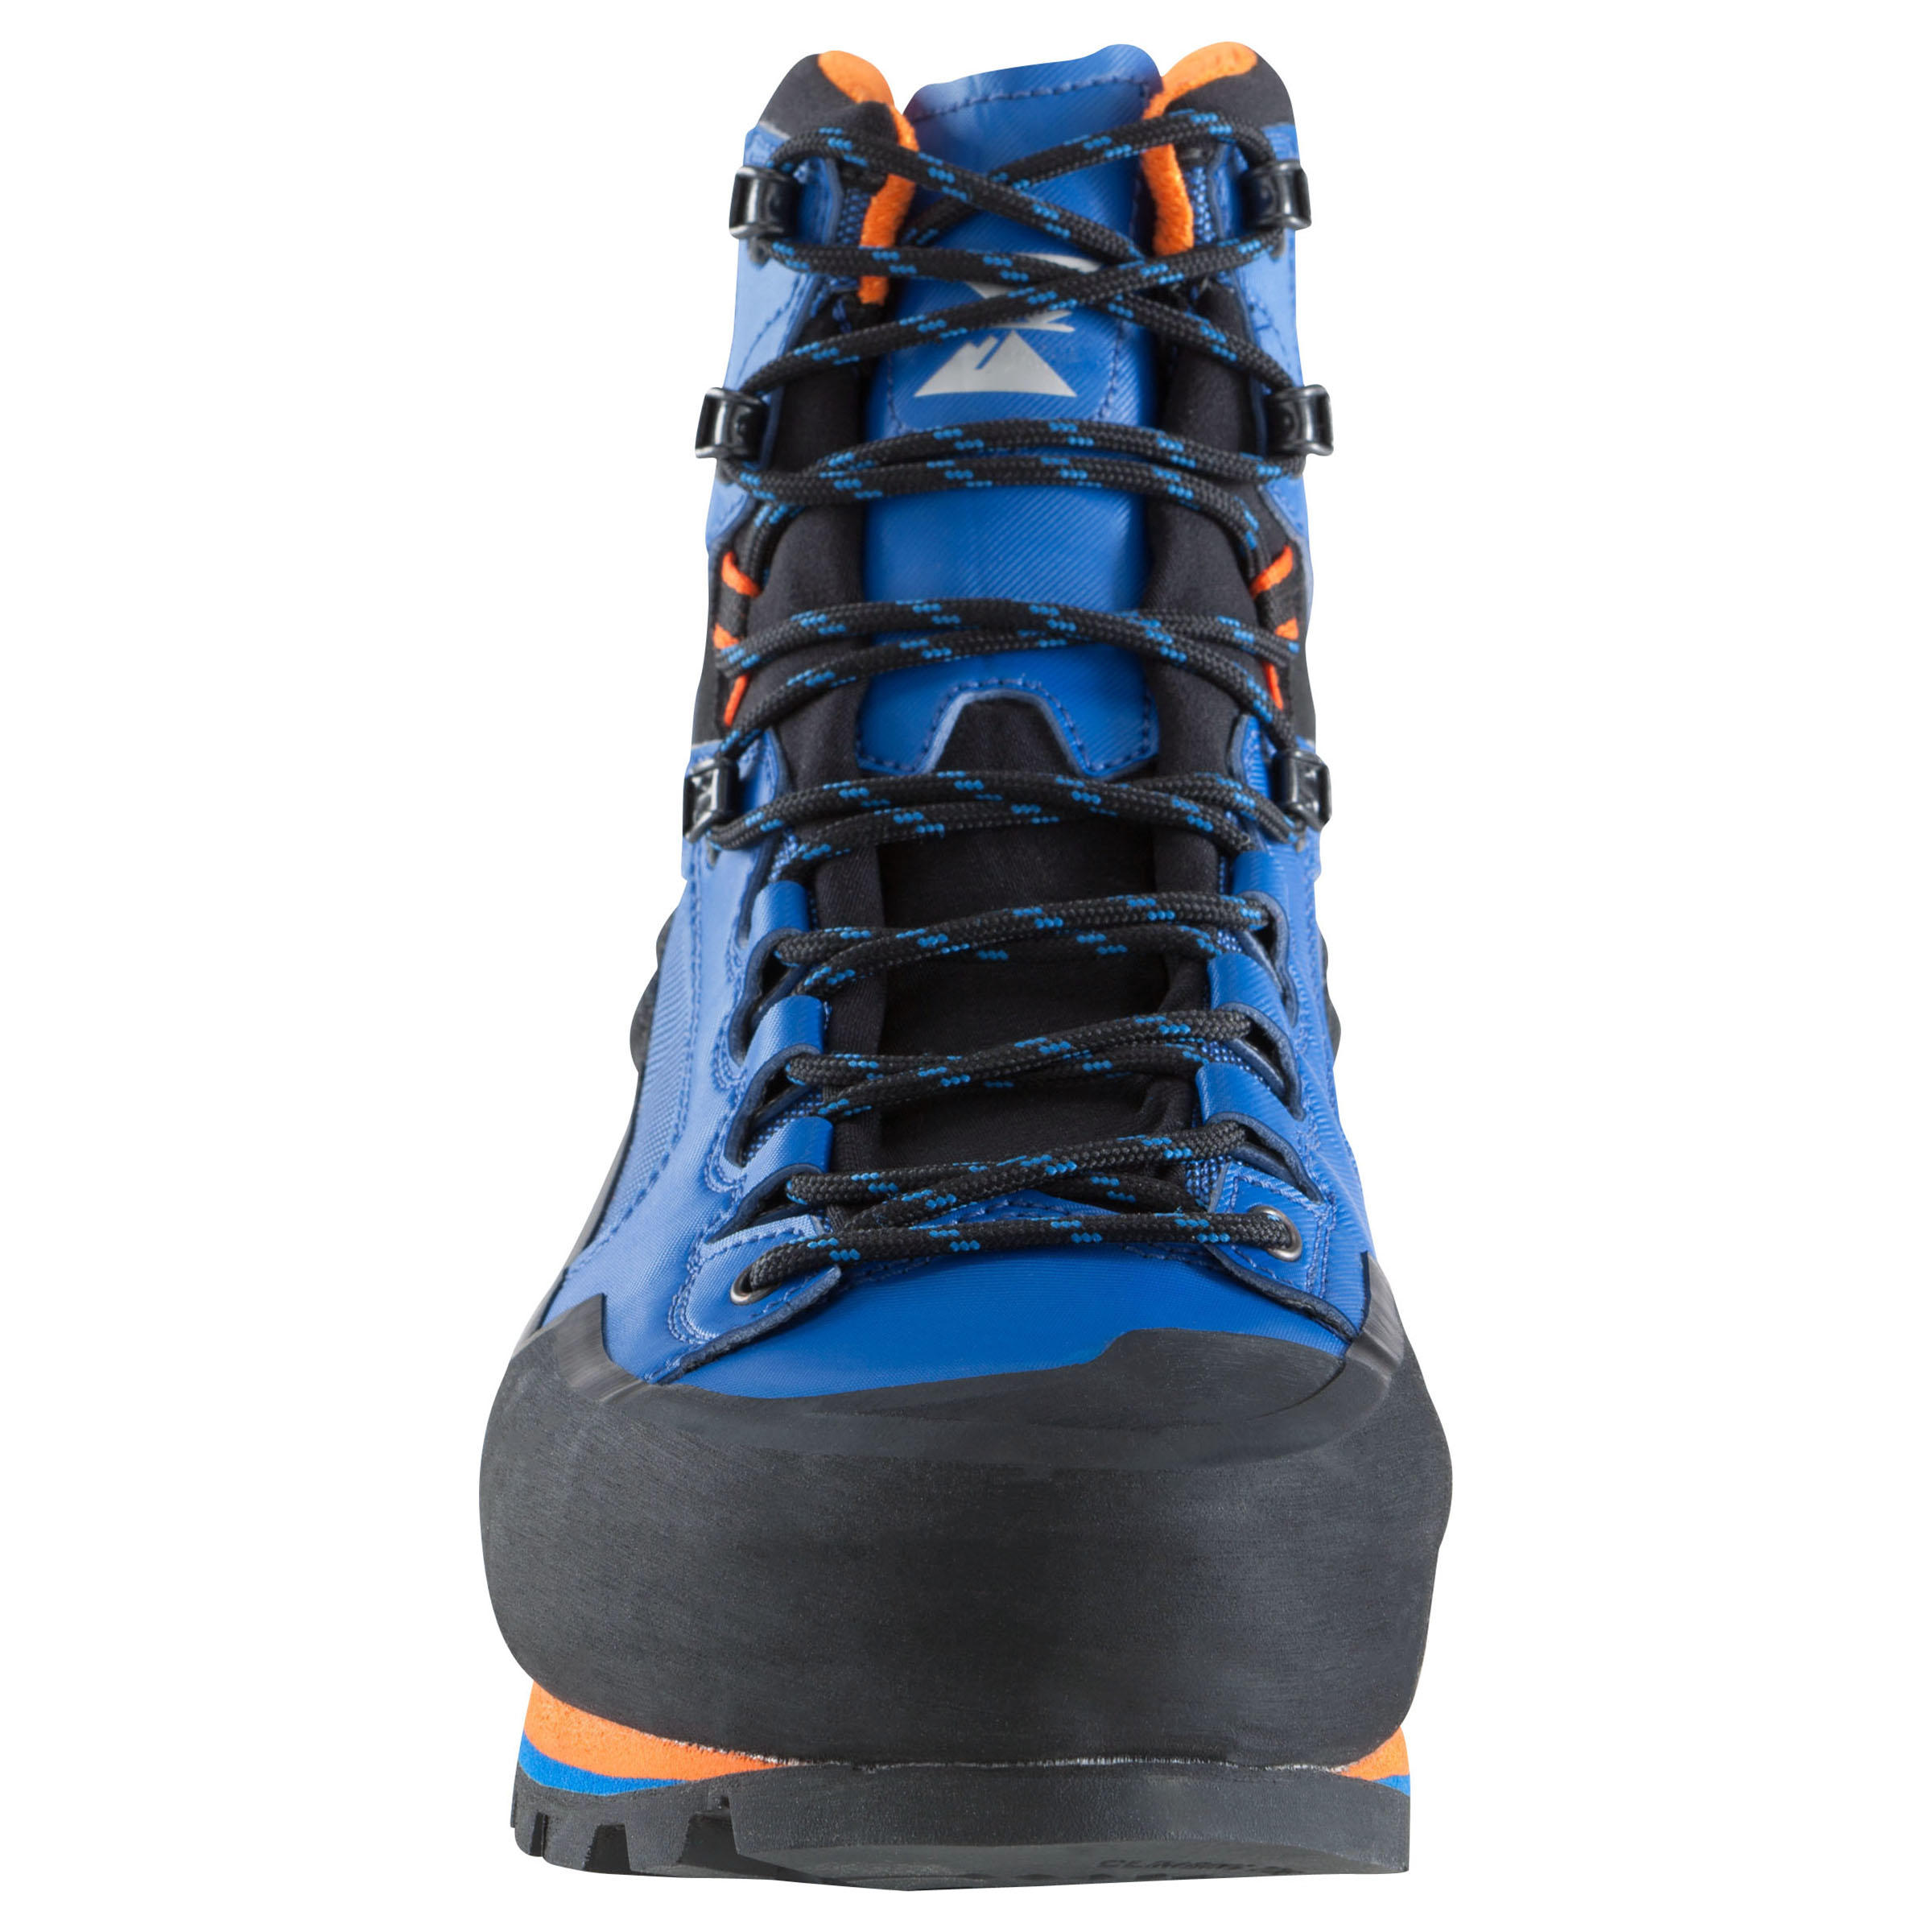 Men's 3 seasons mountaineering boots - ALPINISM LIGHT Blue 5/7